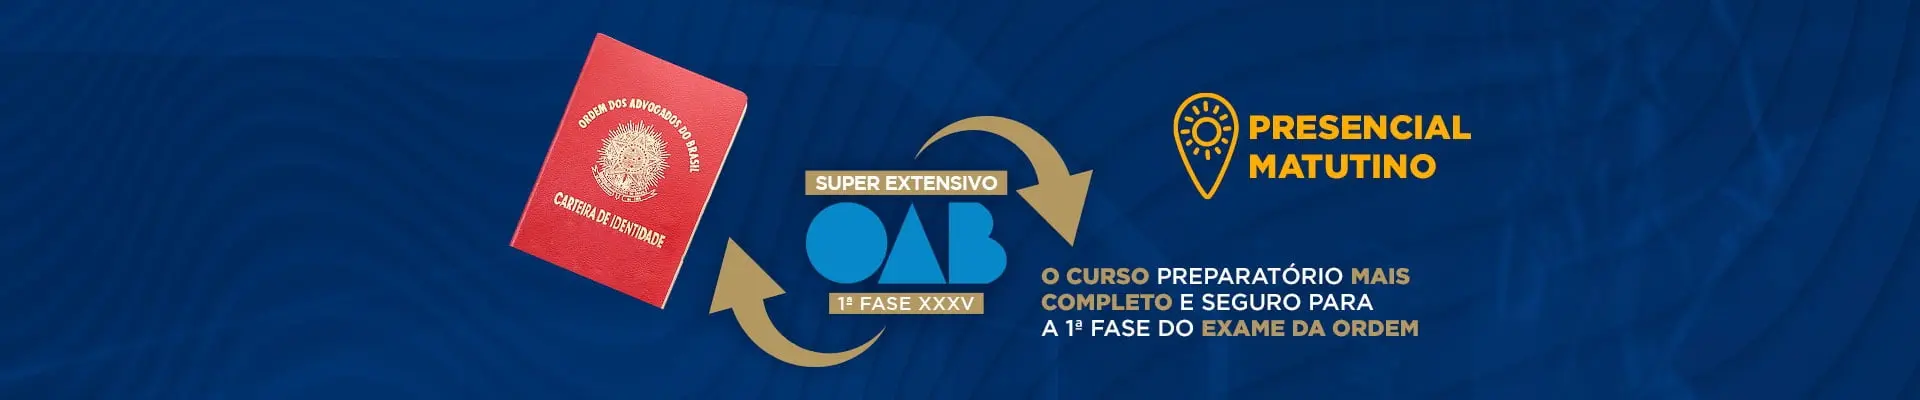 Super Extensivo - OAB 1ª Fase XXXV Exame - Presencial Matutino